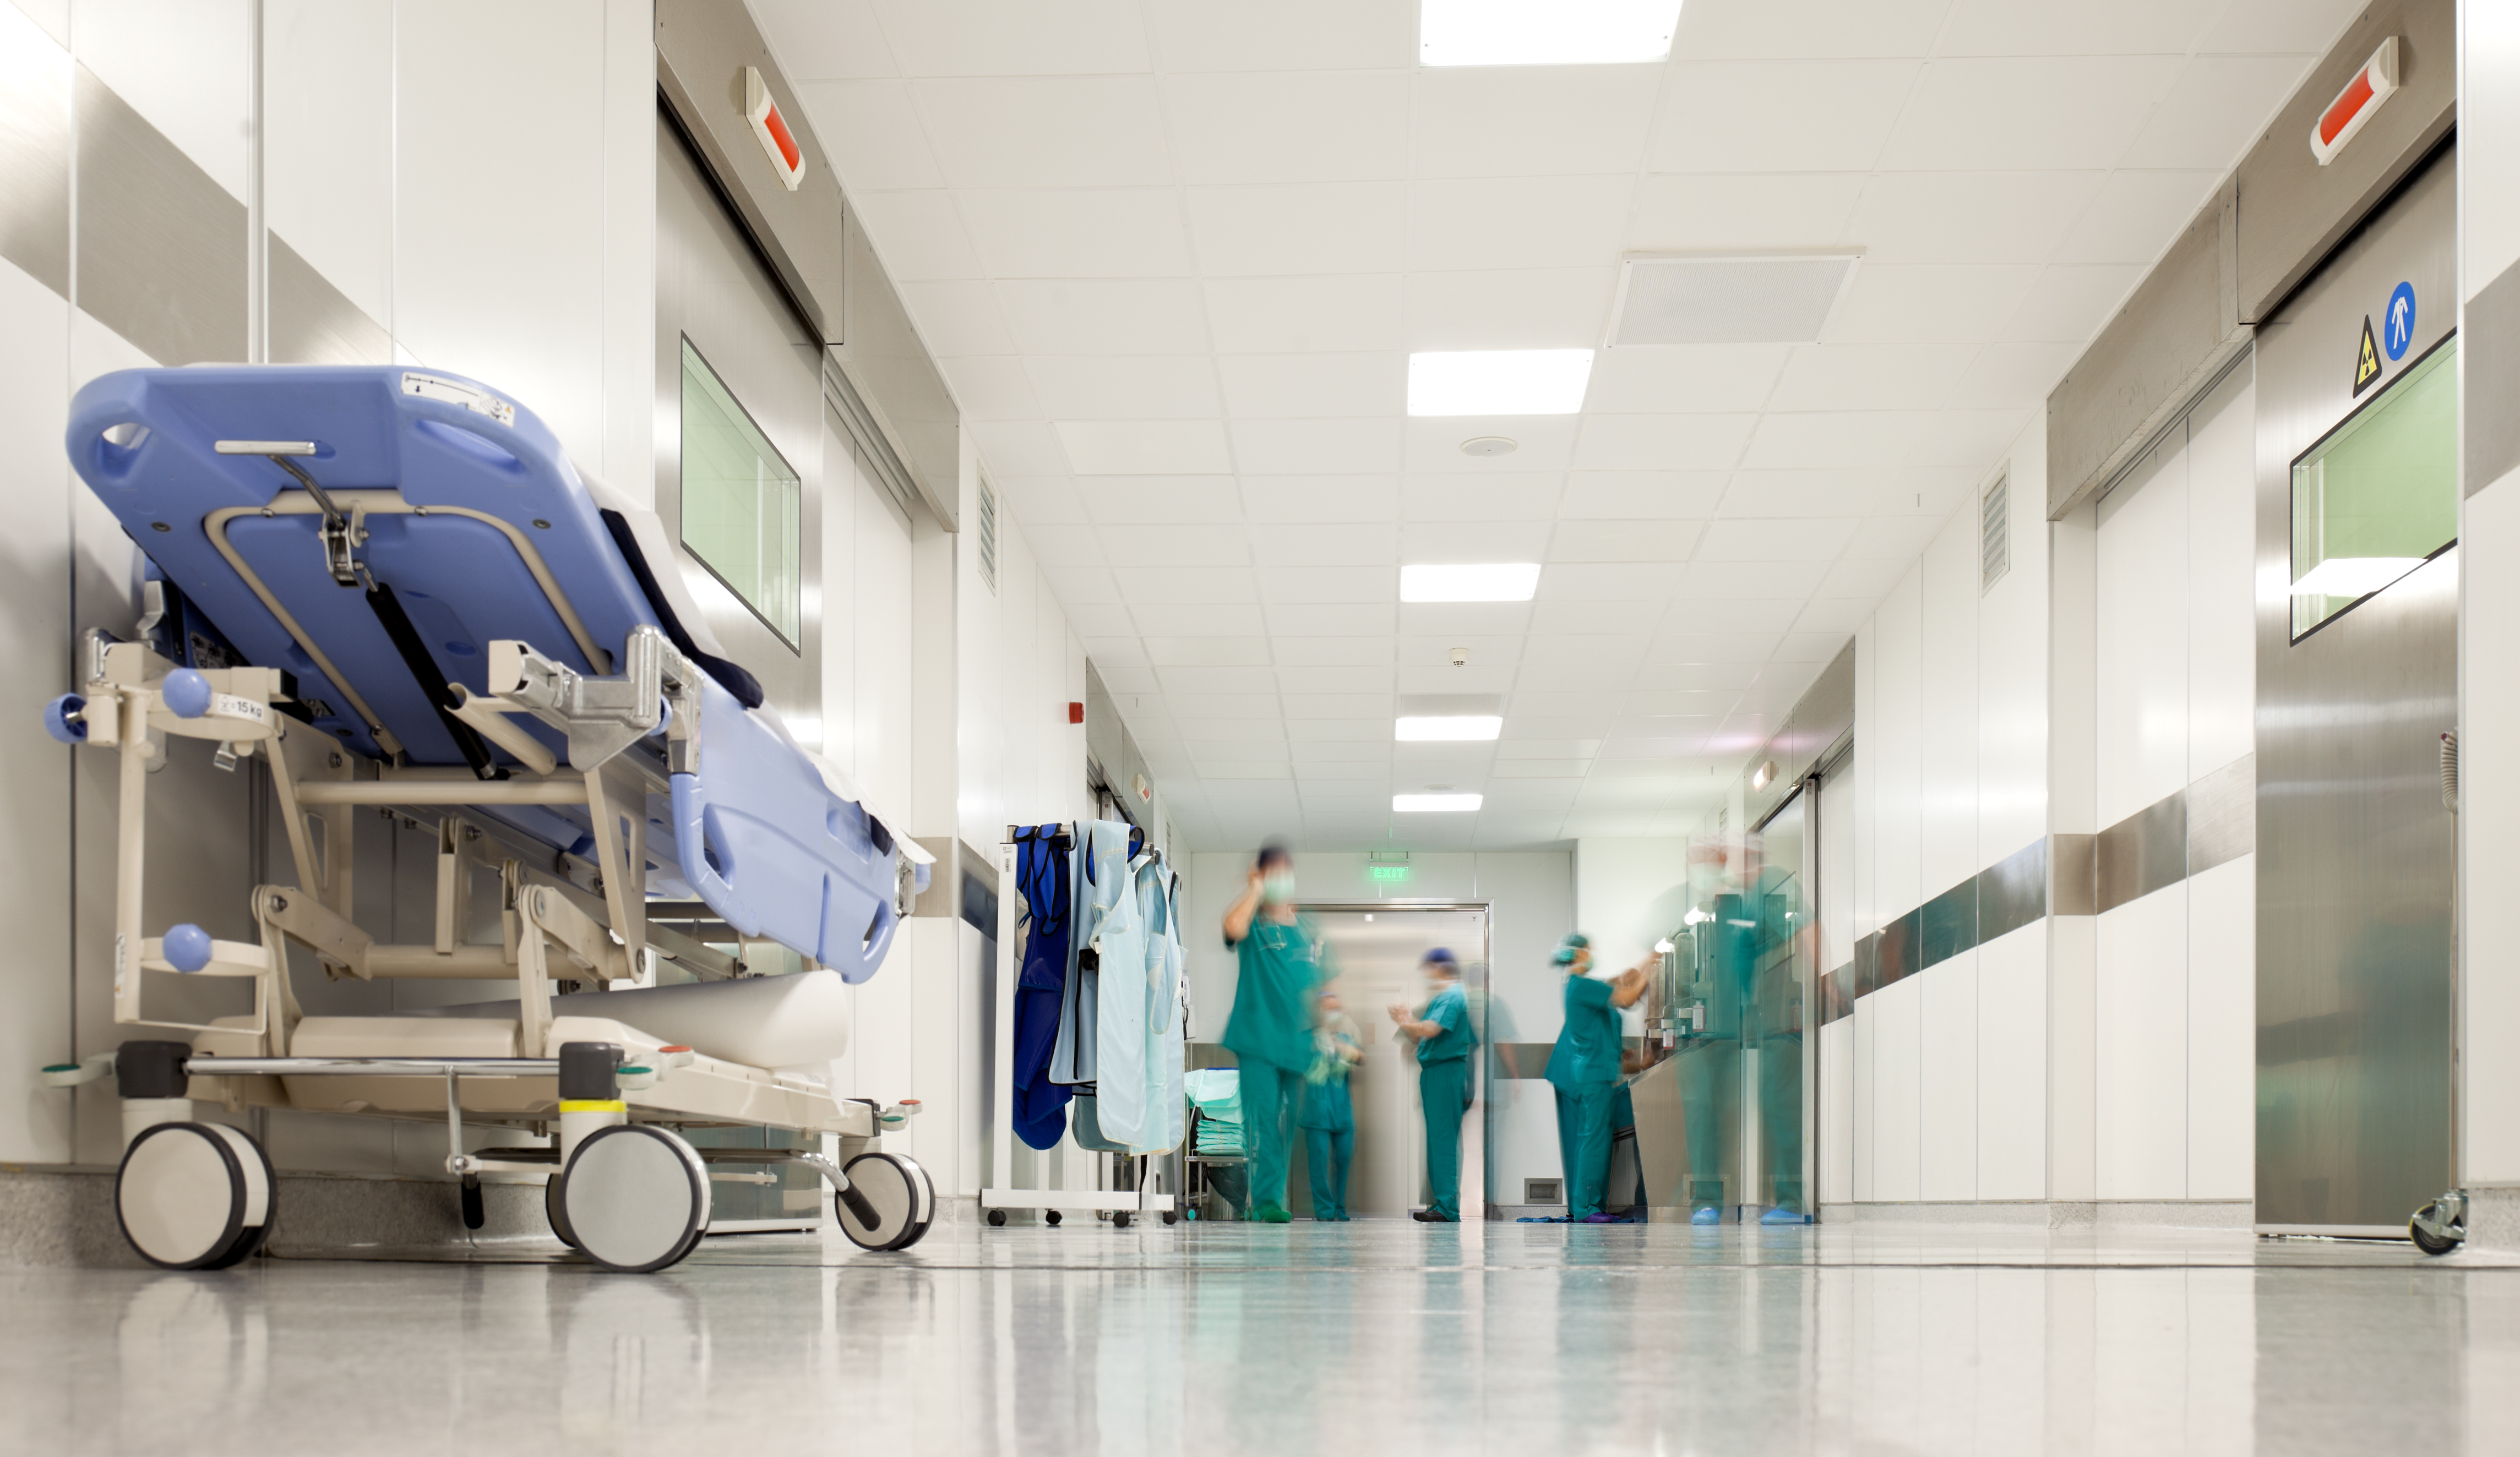 Hospital hallway, emergency room | Source: Shutterstock